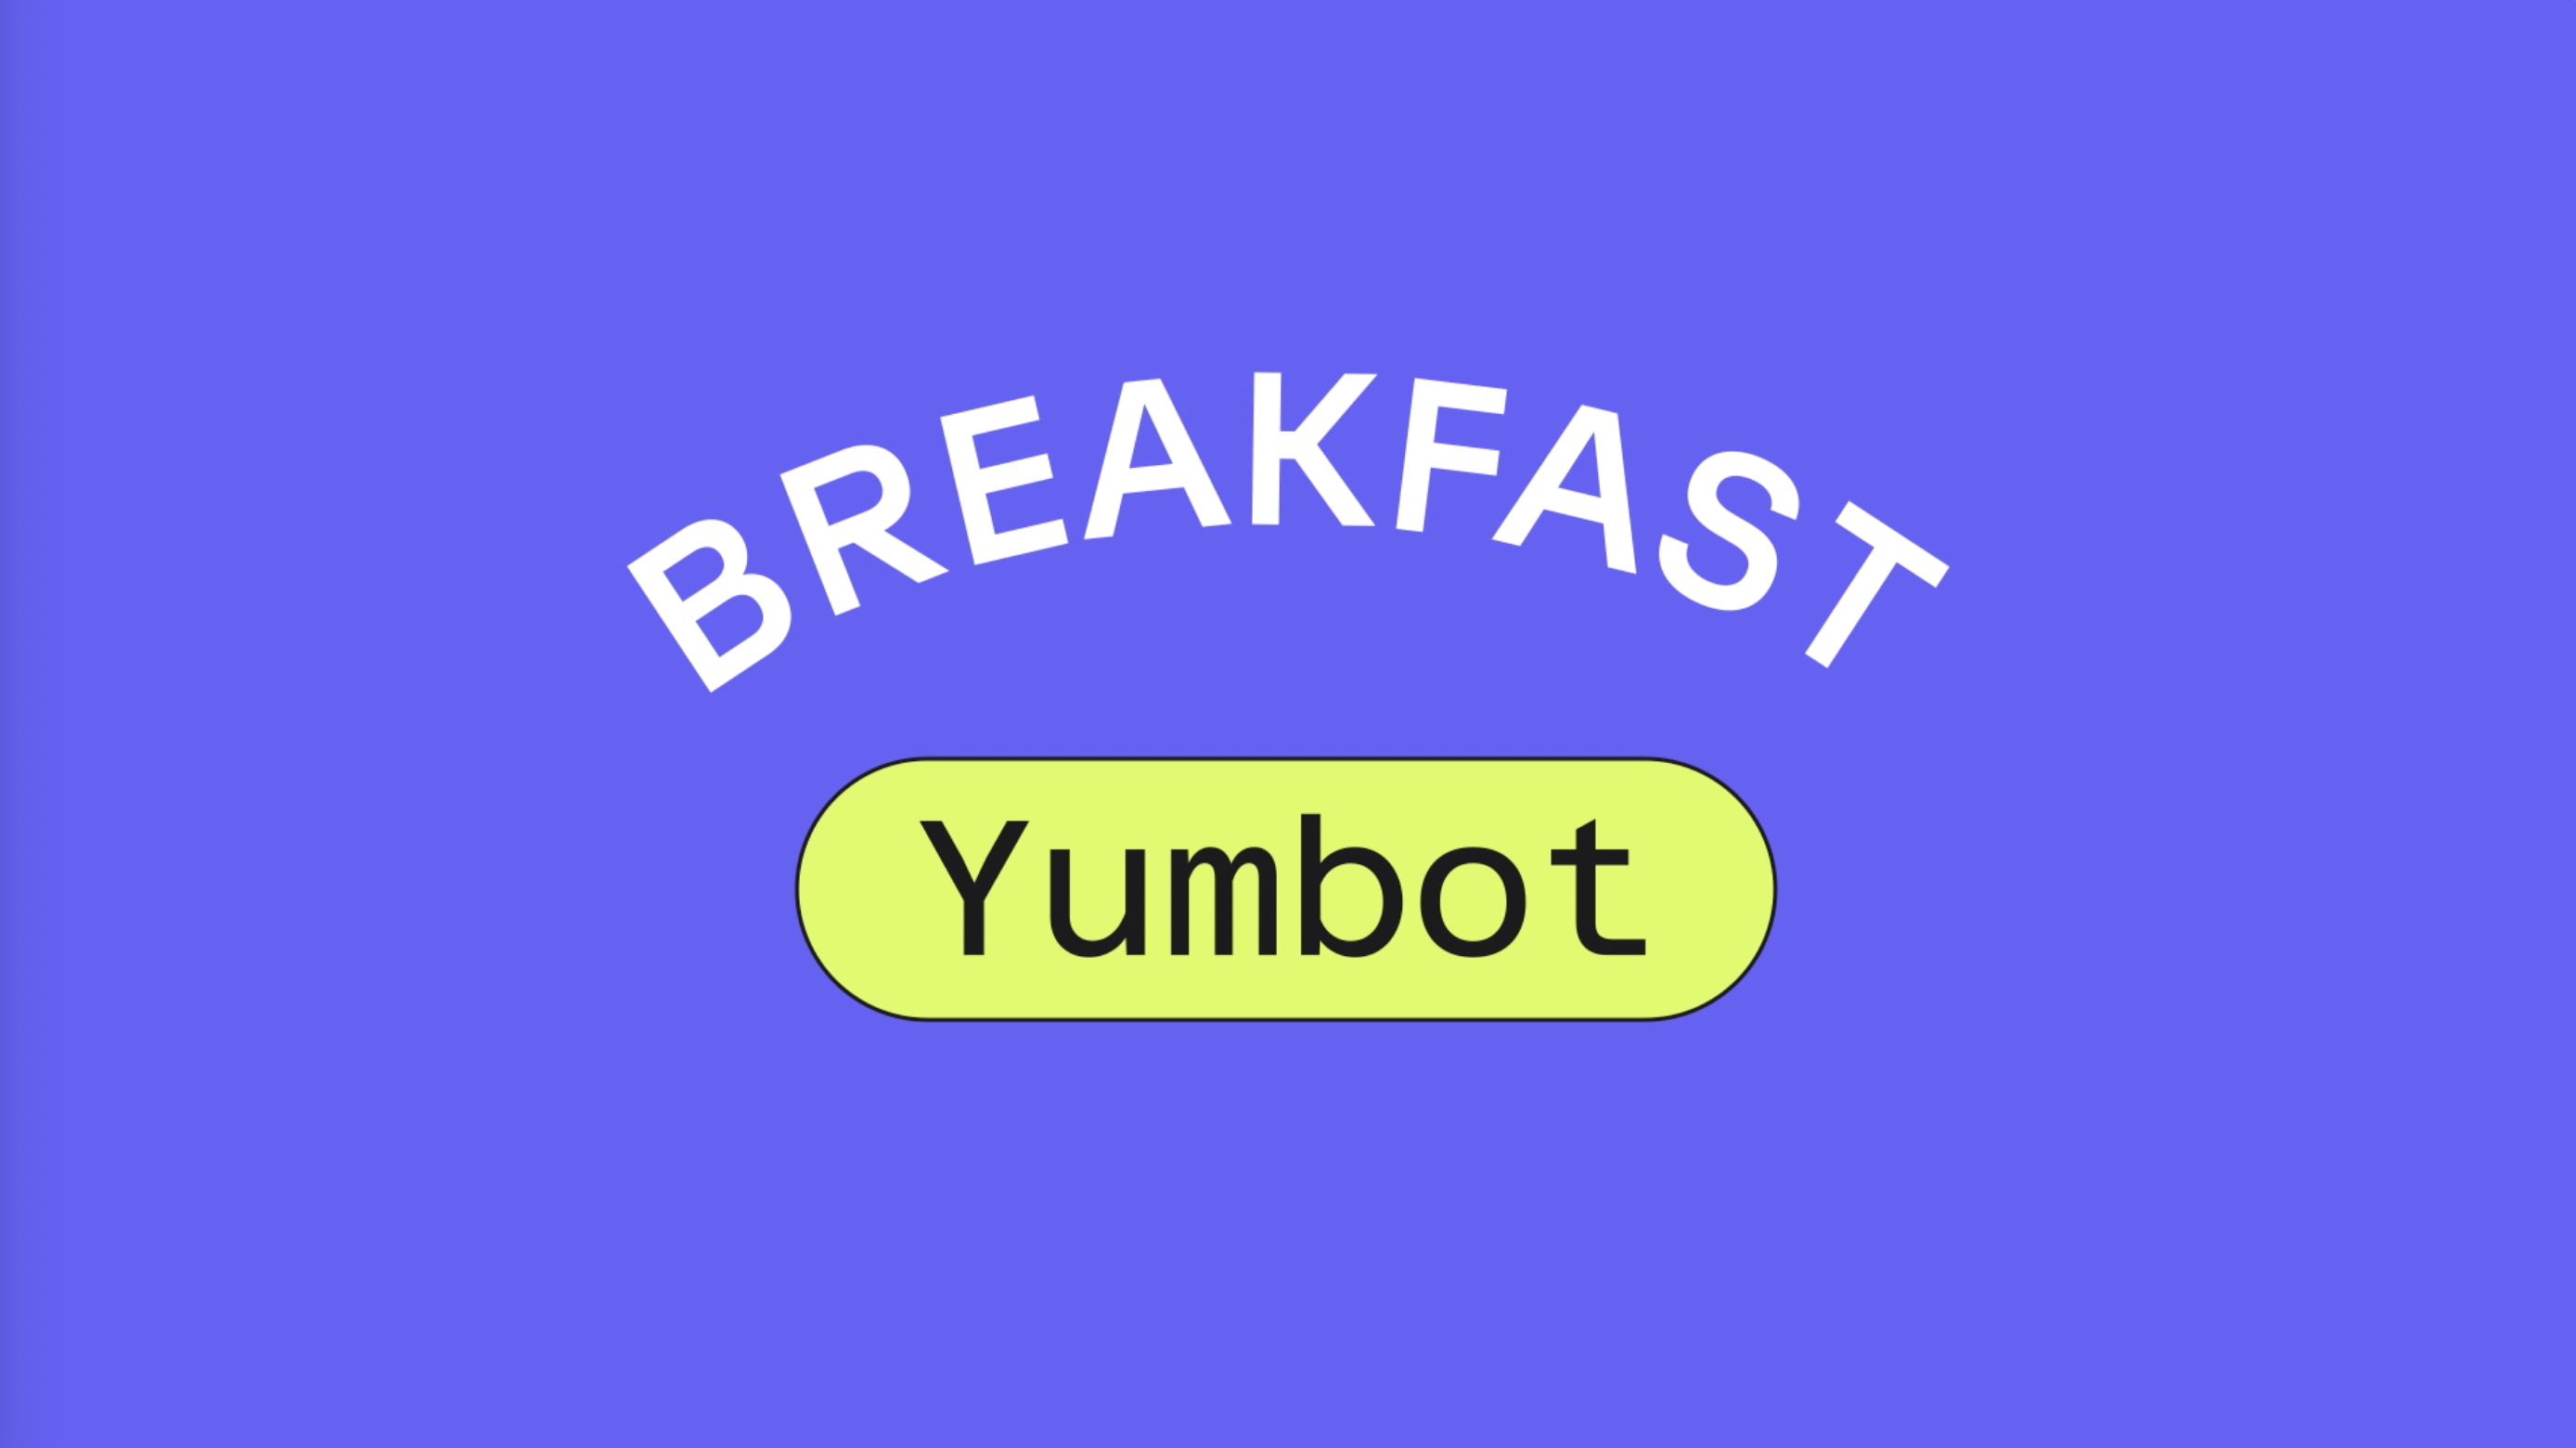 Ad spot: Introducing Breakfast Yumbot!